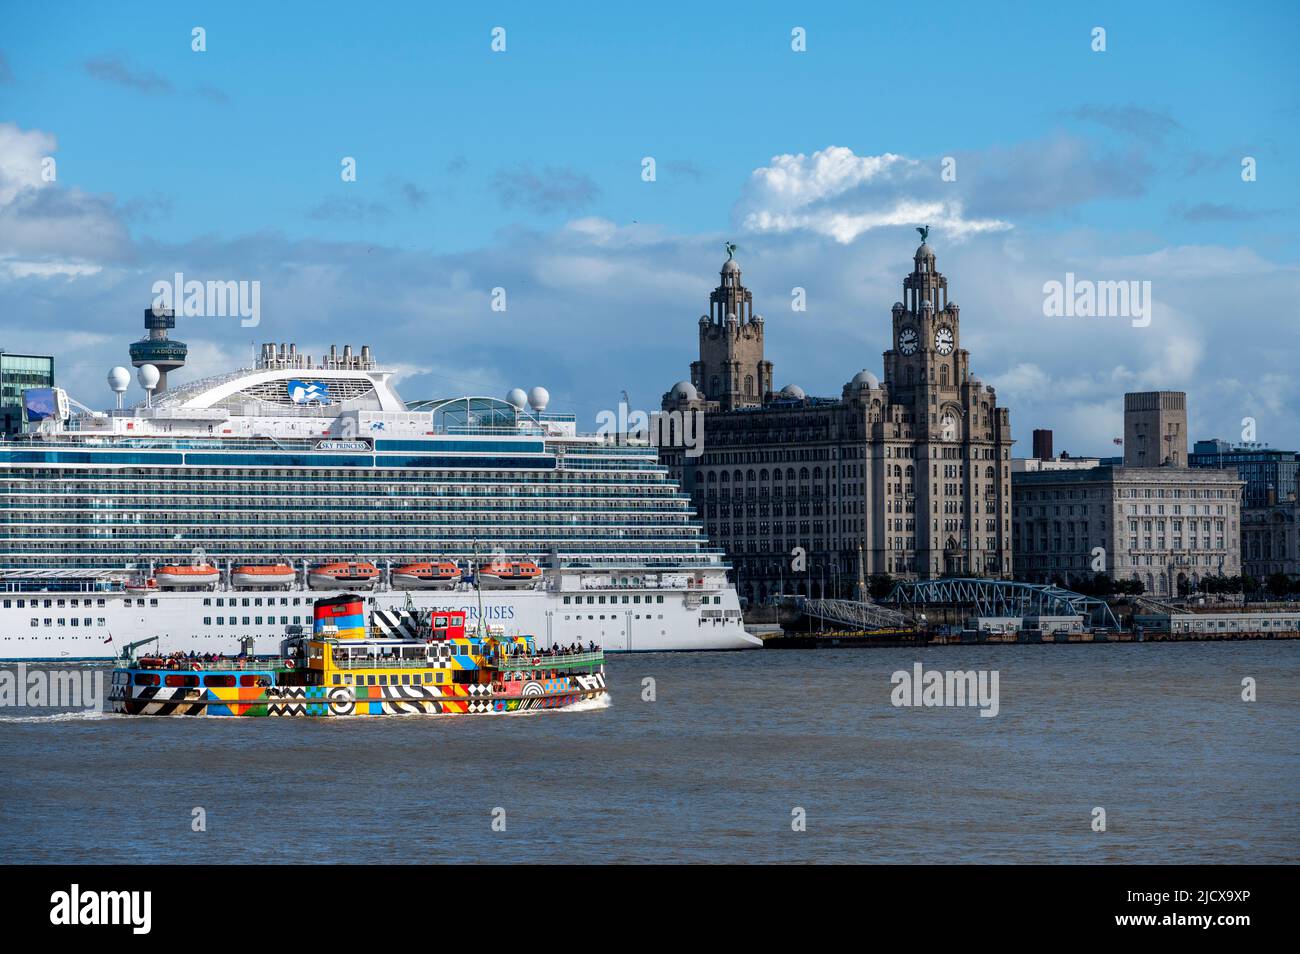 The Liver Building avec navire de croisière et ferry Mersey, Liverpool, Merseyside, Angleterre, Royaume-Uni, Europe Banque D'Images